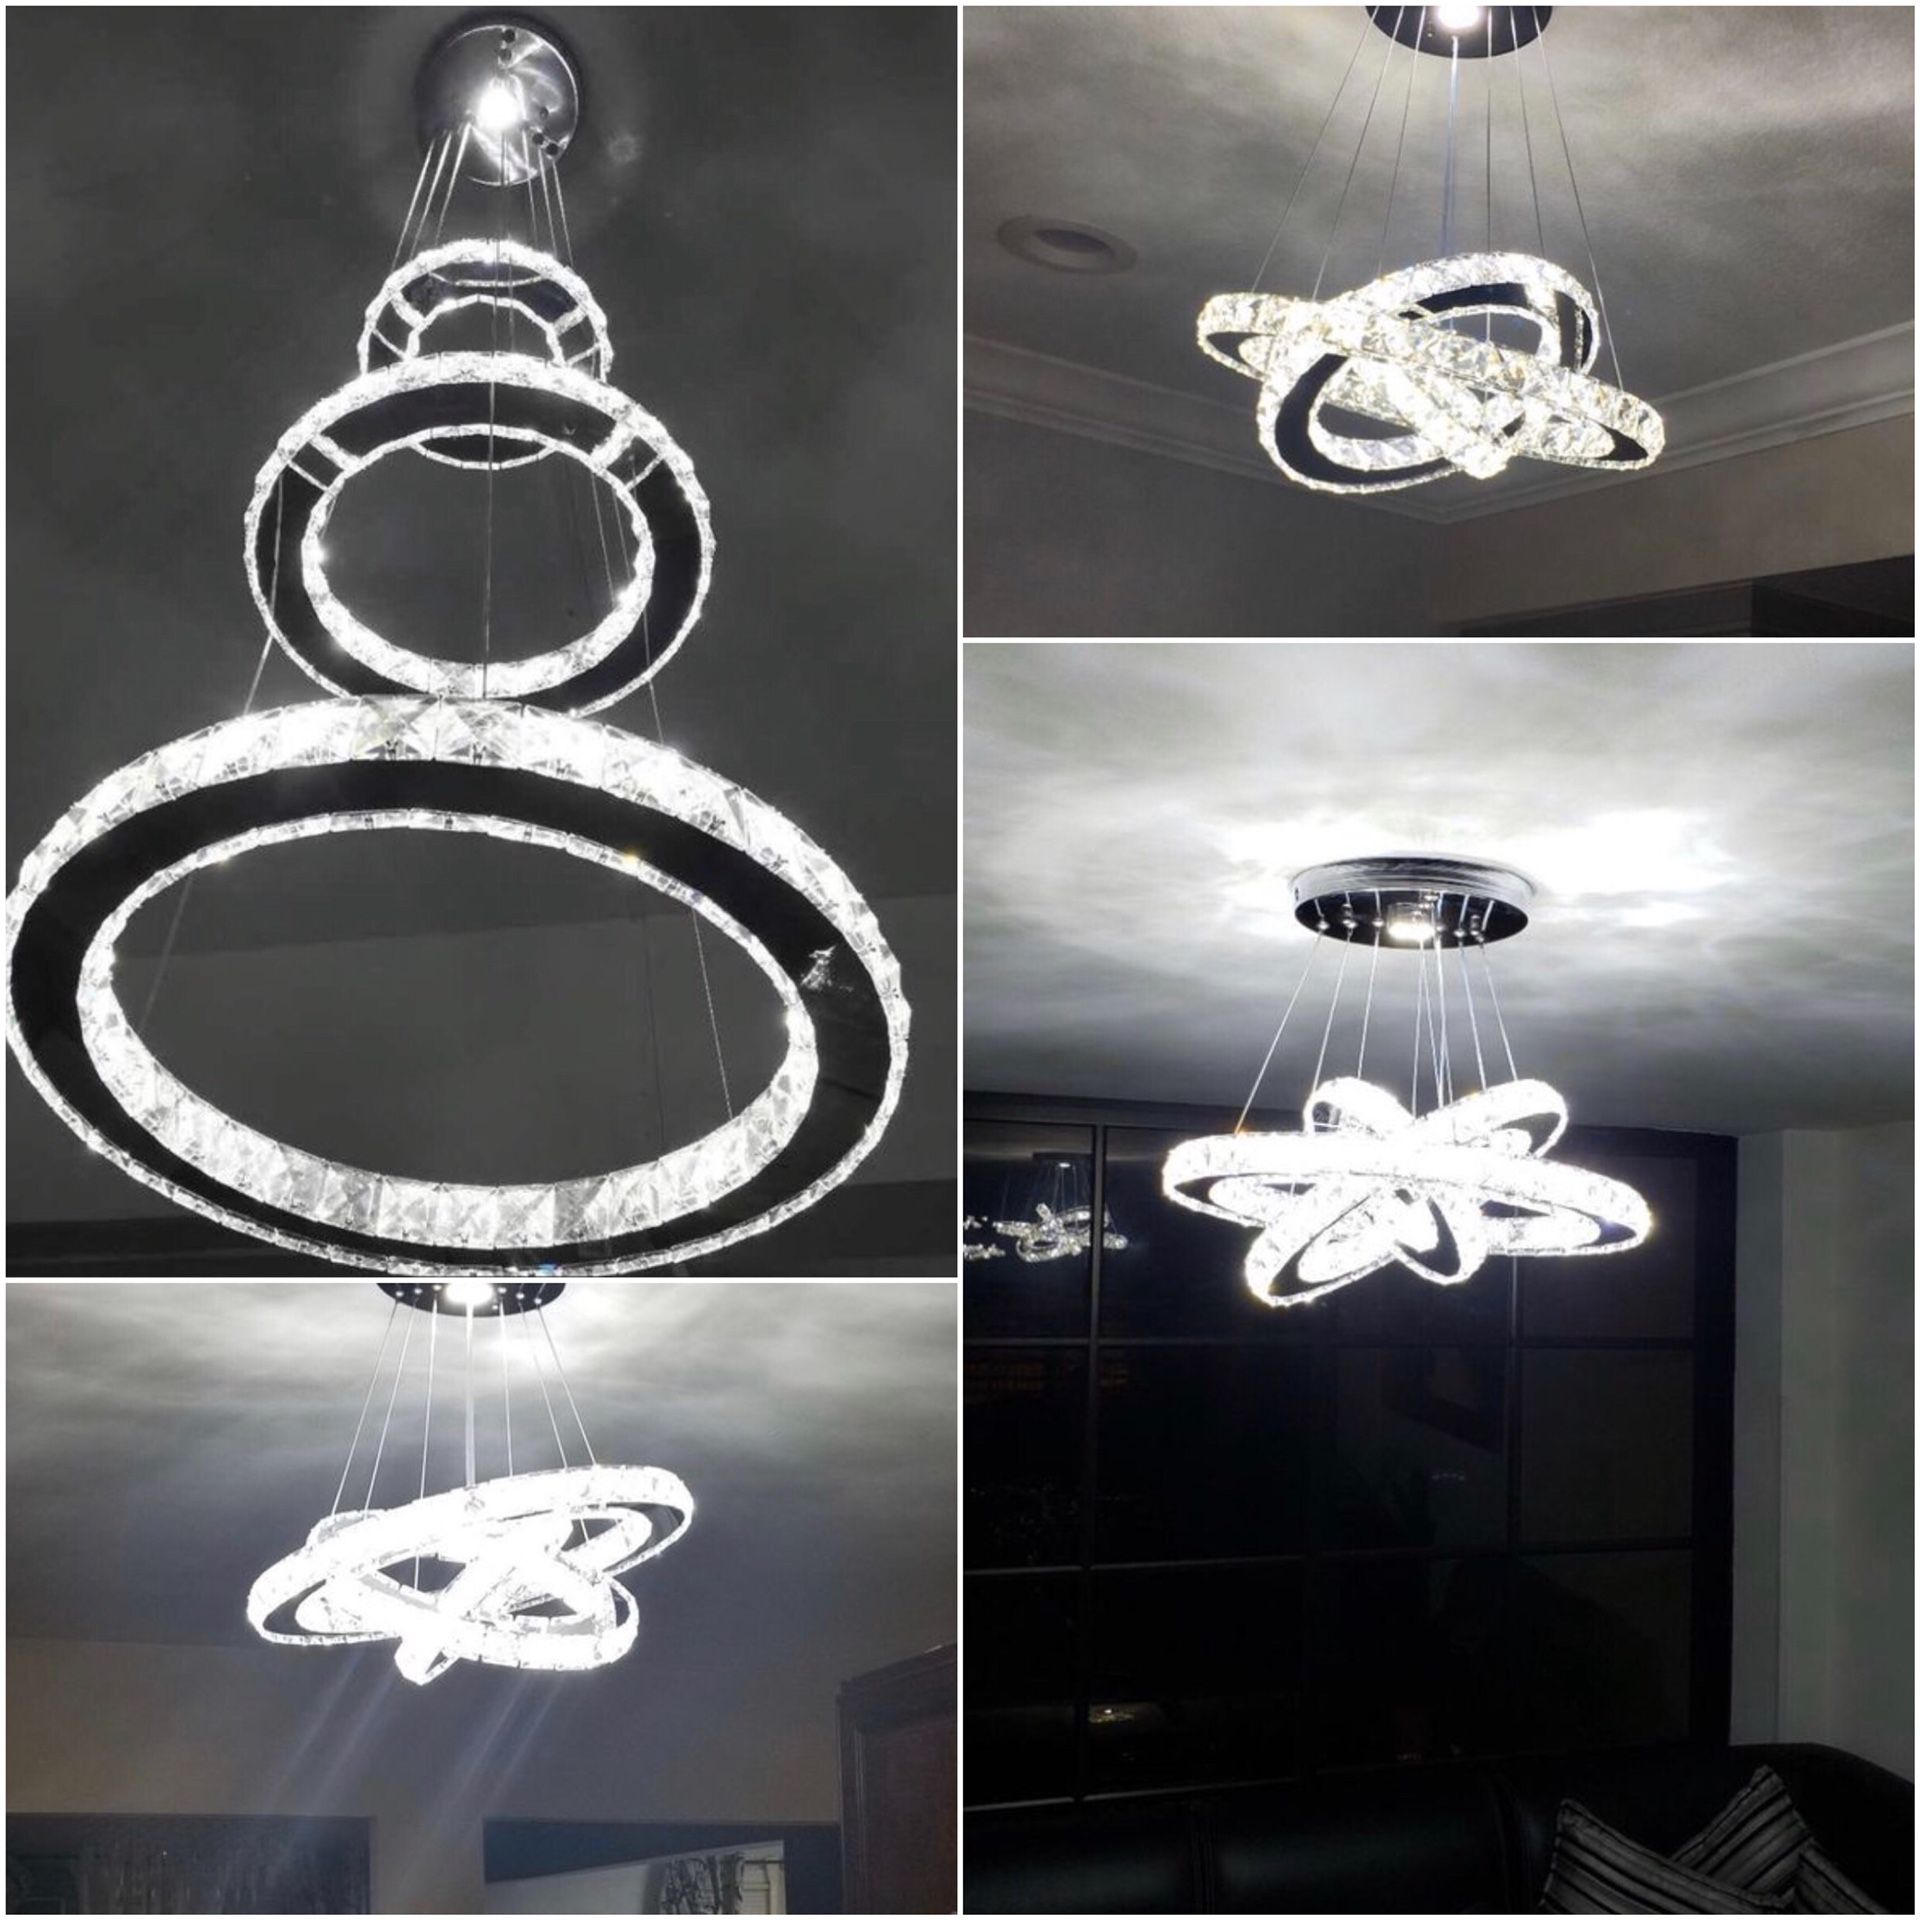 Dixun LED Chandeliers Modern Crystal 3 Rings Ceiling Adjustable Stainless Steel